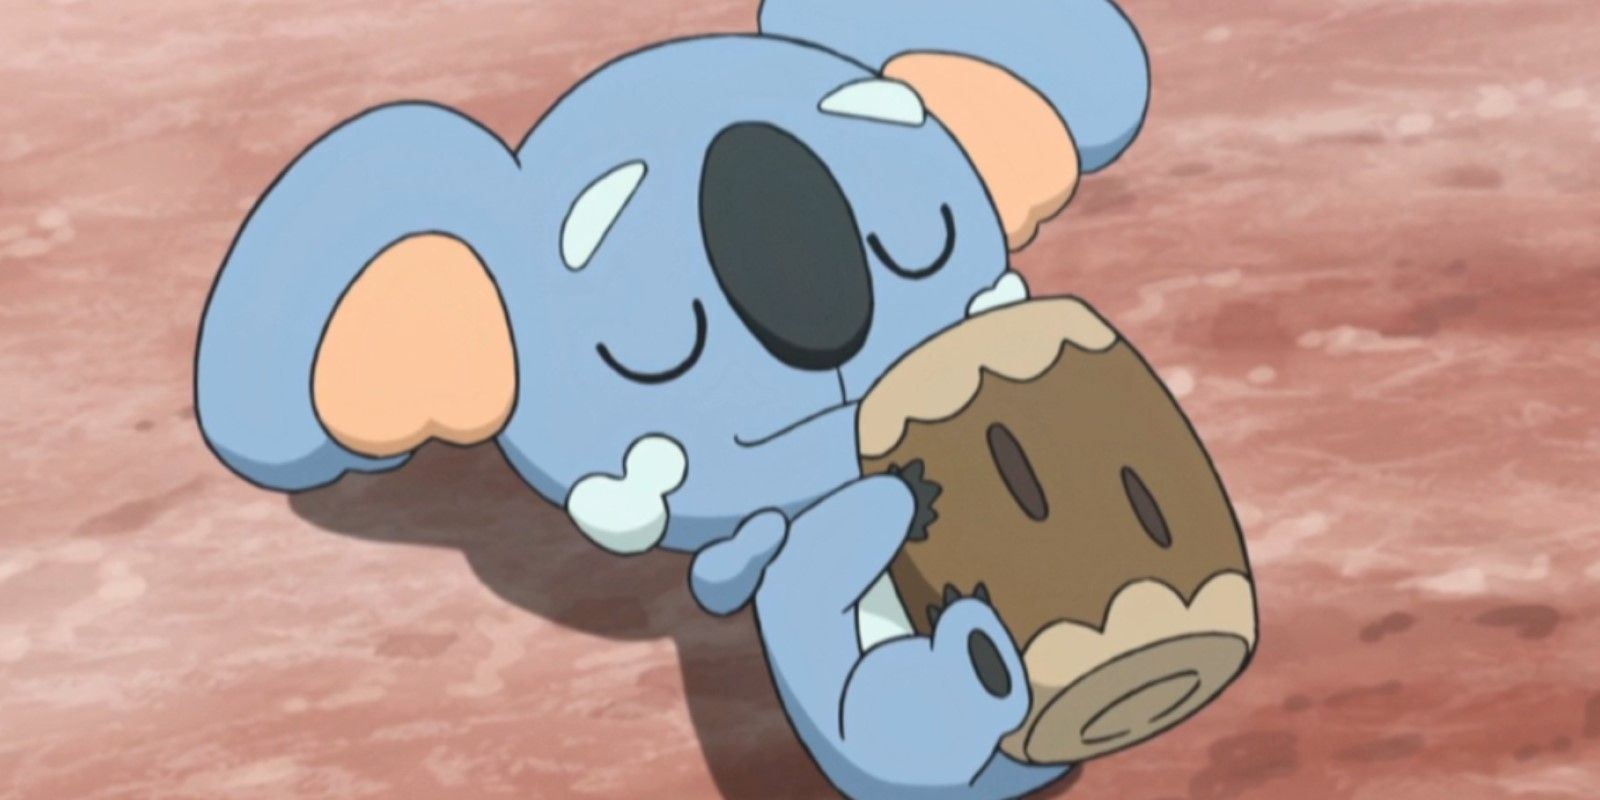 Komala from the Pokemon anime sleeping peacefully